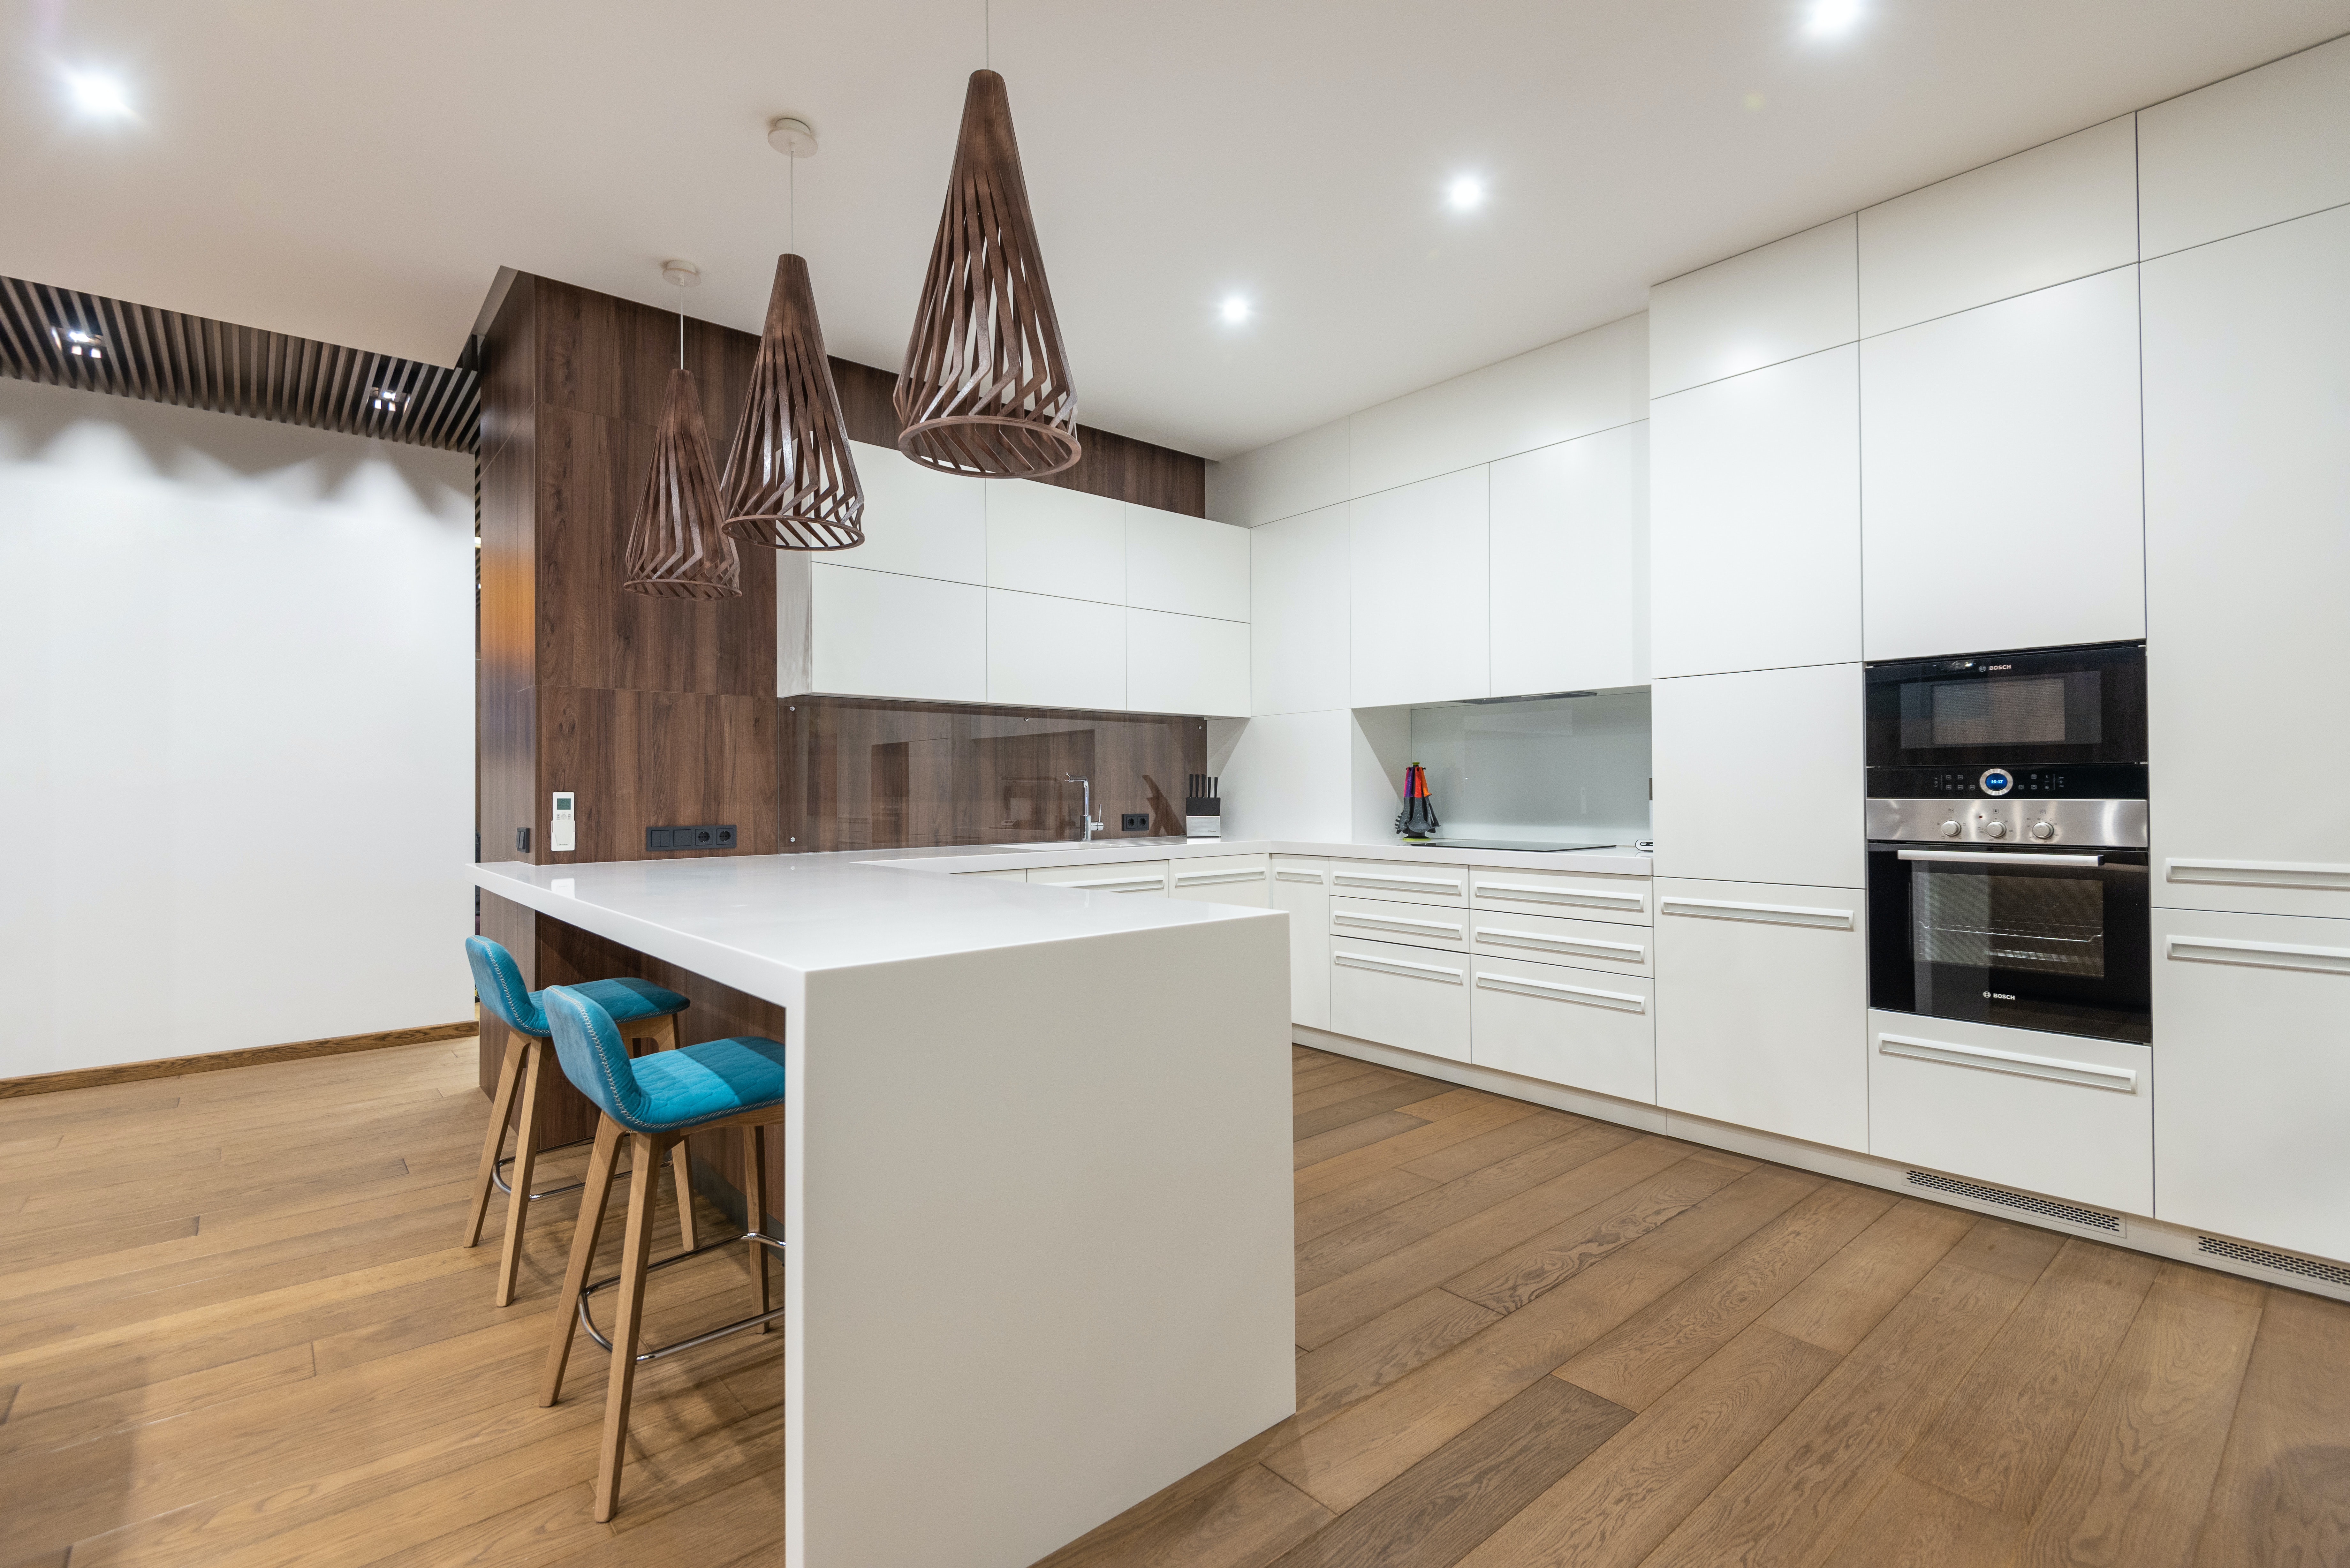 A modern kitchen with new flooring